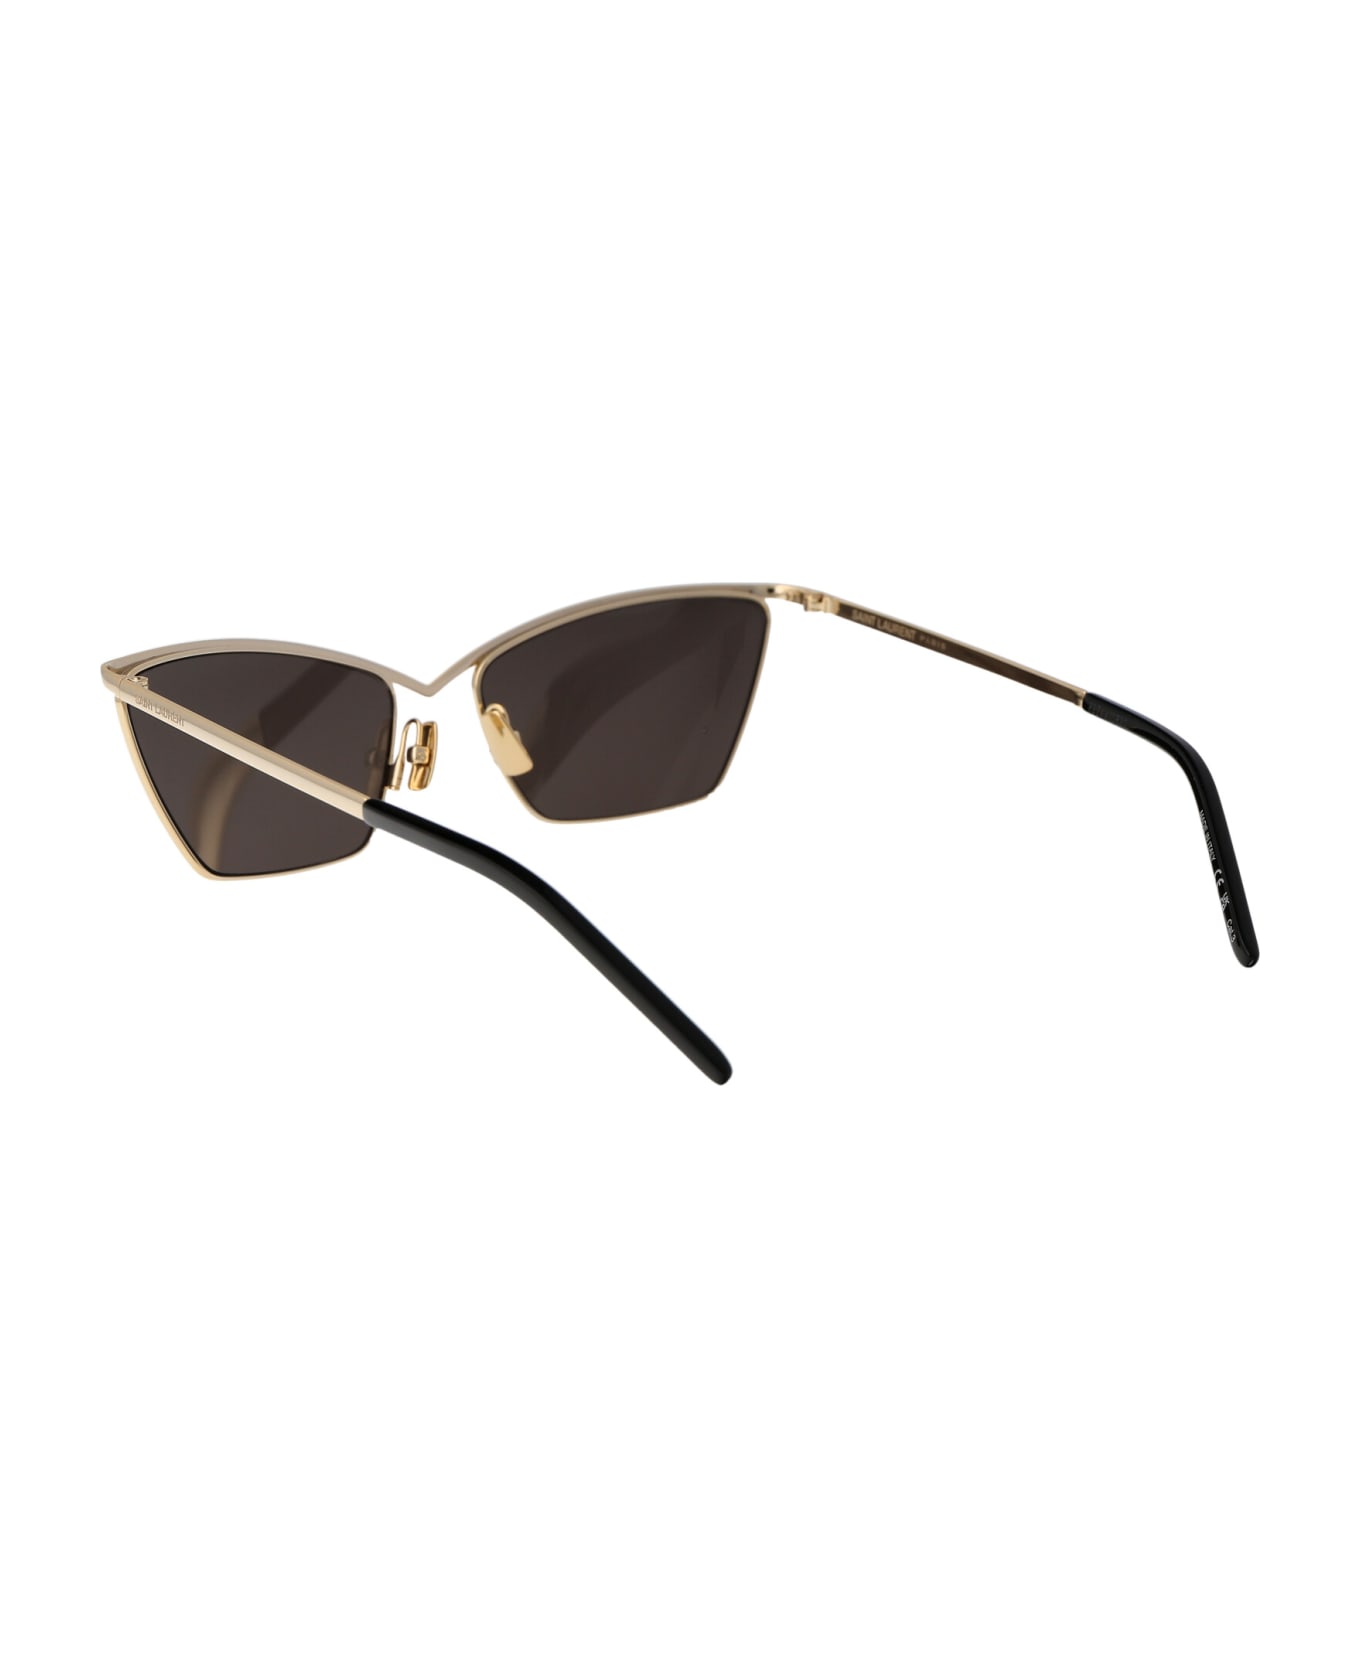 Saint Laurent Eyewear Sl 637 Sunglasses - 003 GOLD GOLD BLACK